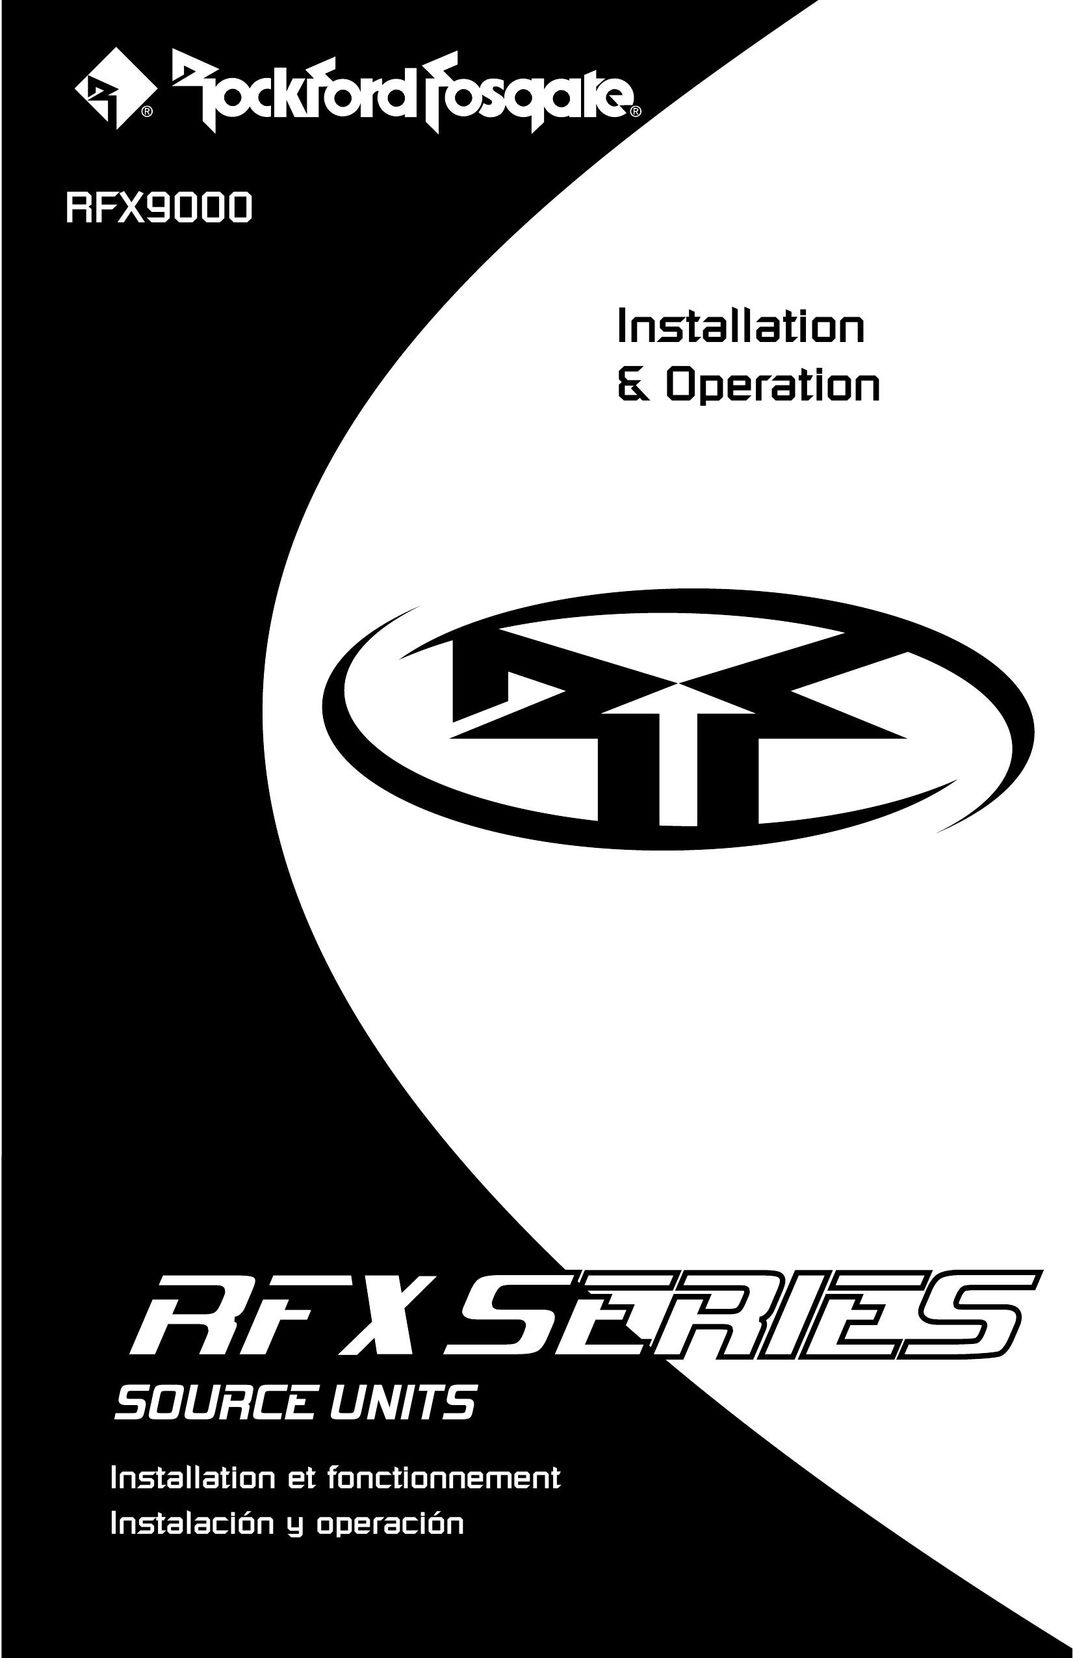 Rockford Fosgate RFX9000 Car Stereo System User Manual